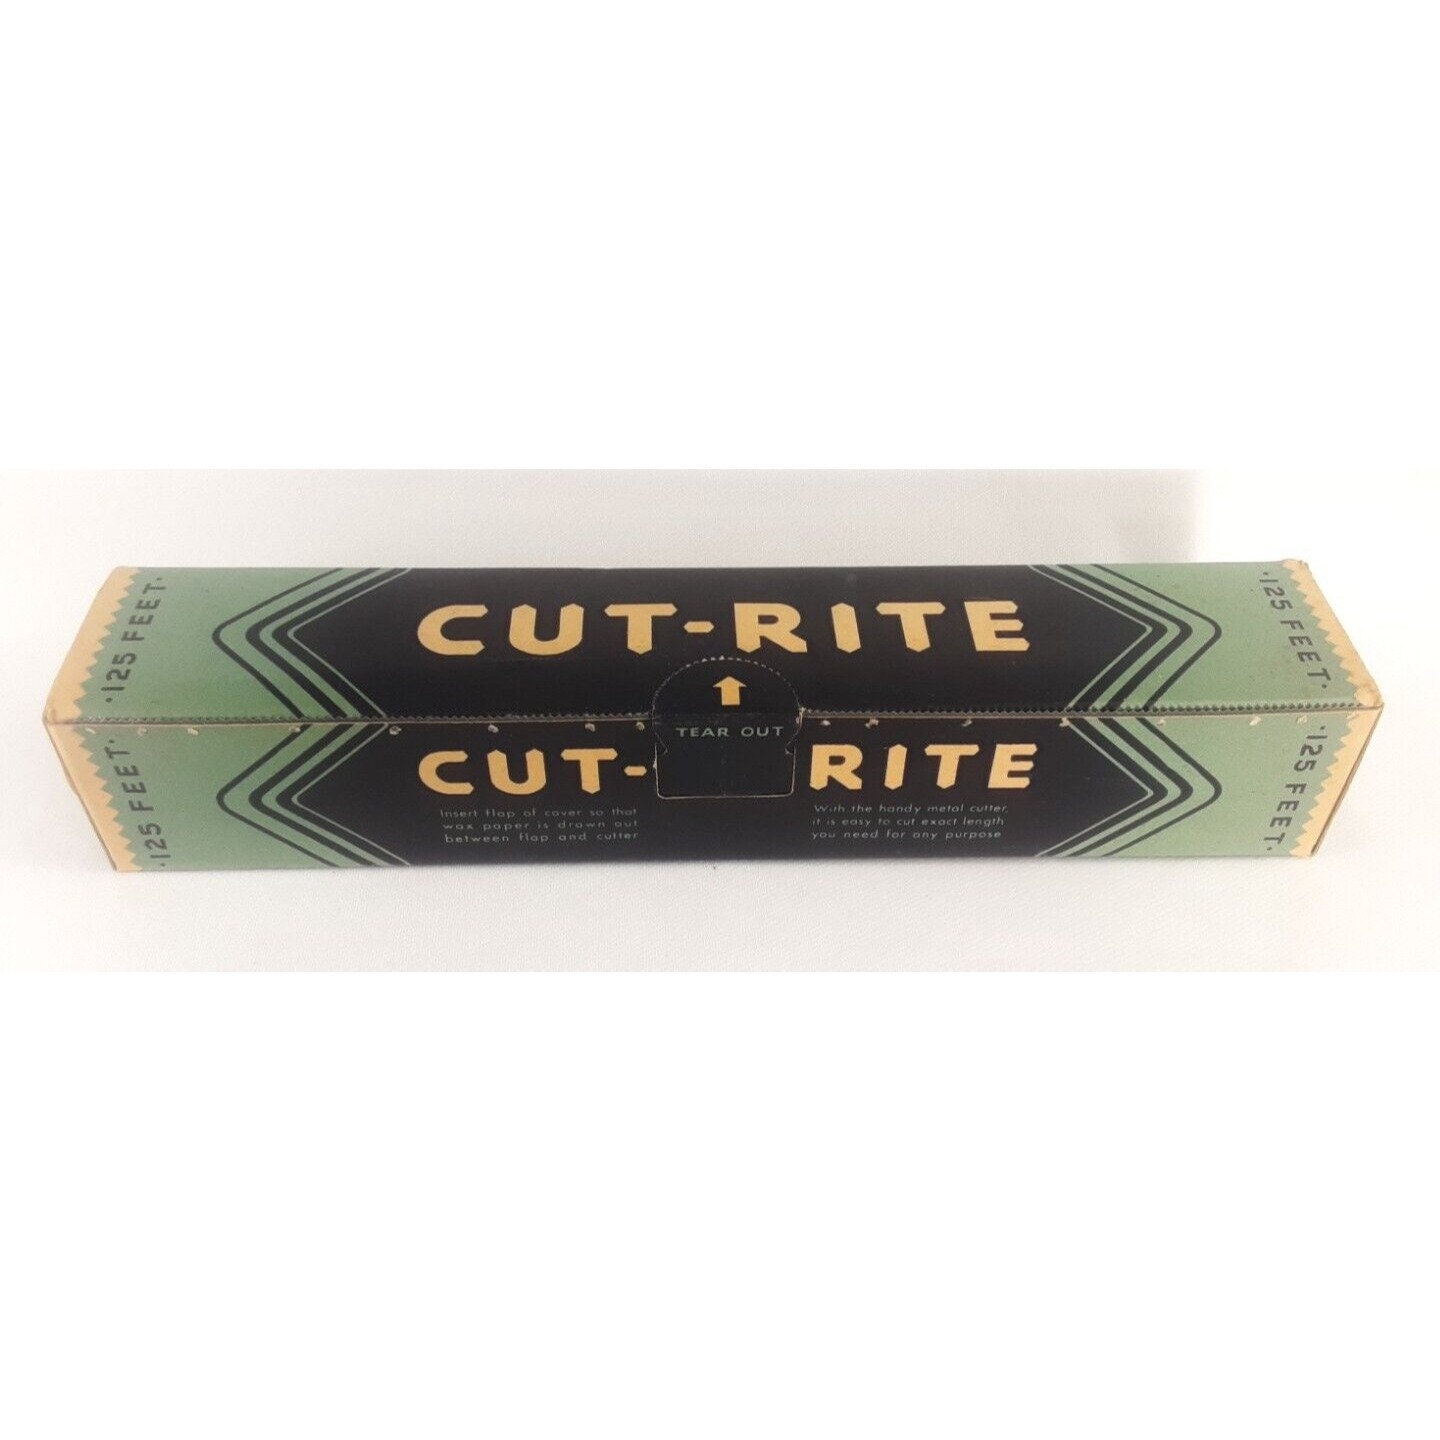 Cut Rite Rare Salesman Sample 1940s Advertising Mini Box Mini Wax Paper  Roll Vintage WWII MCM Kitchen Collectible Advertising Miniature 